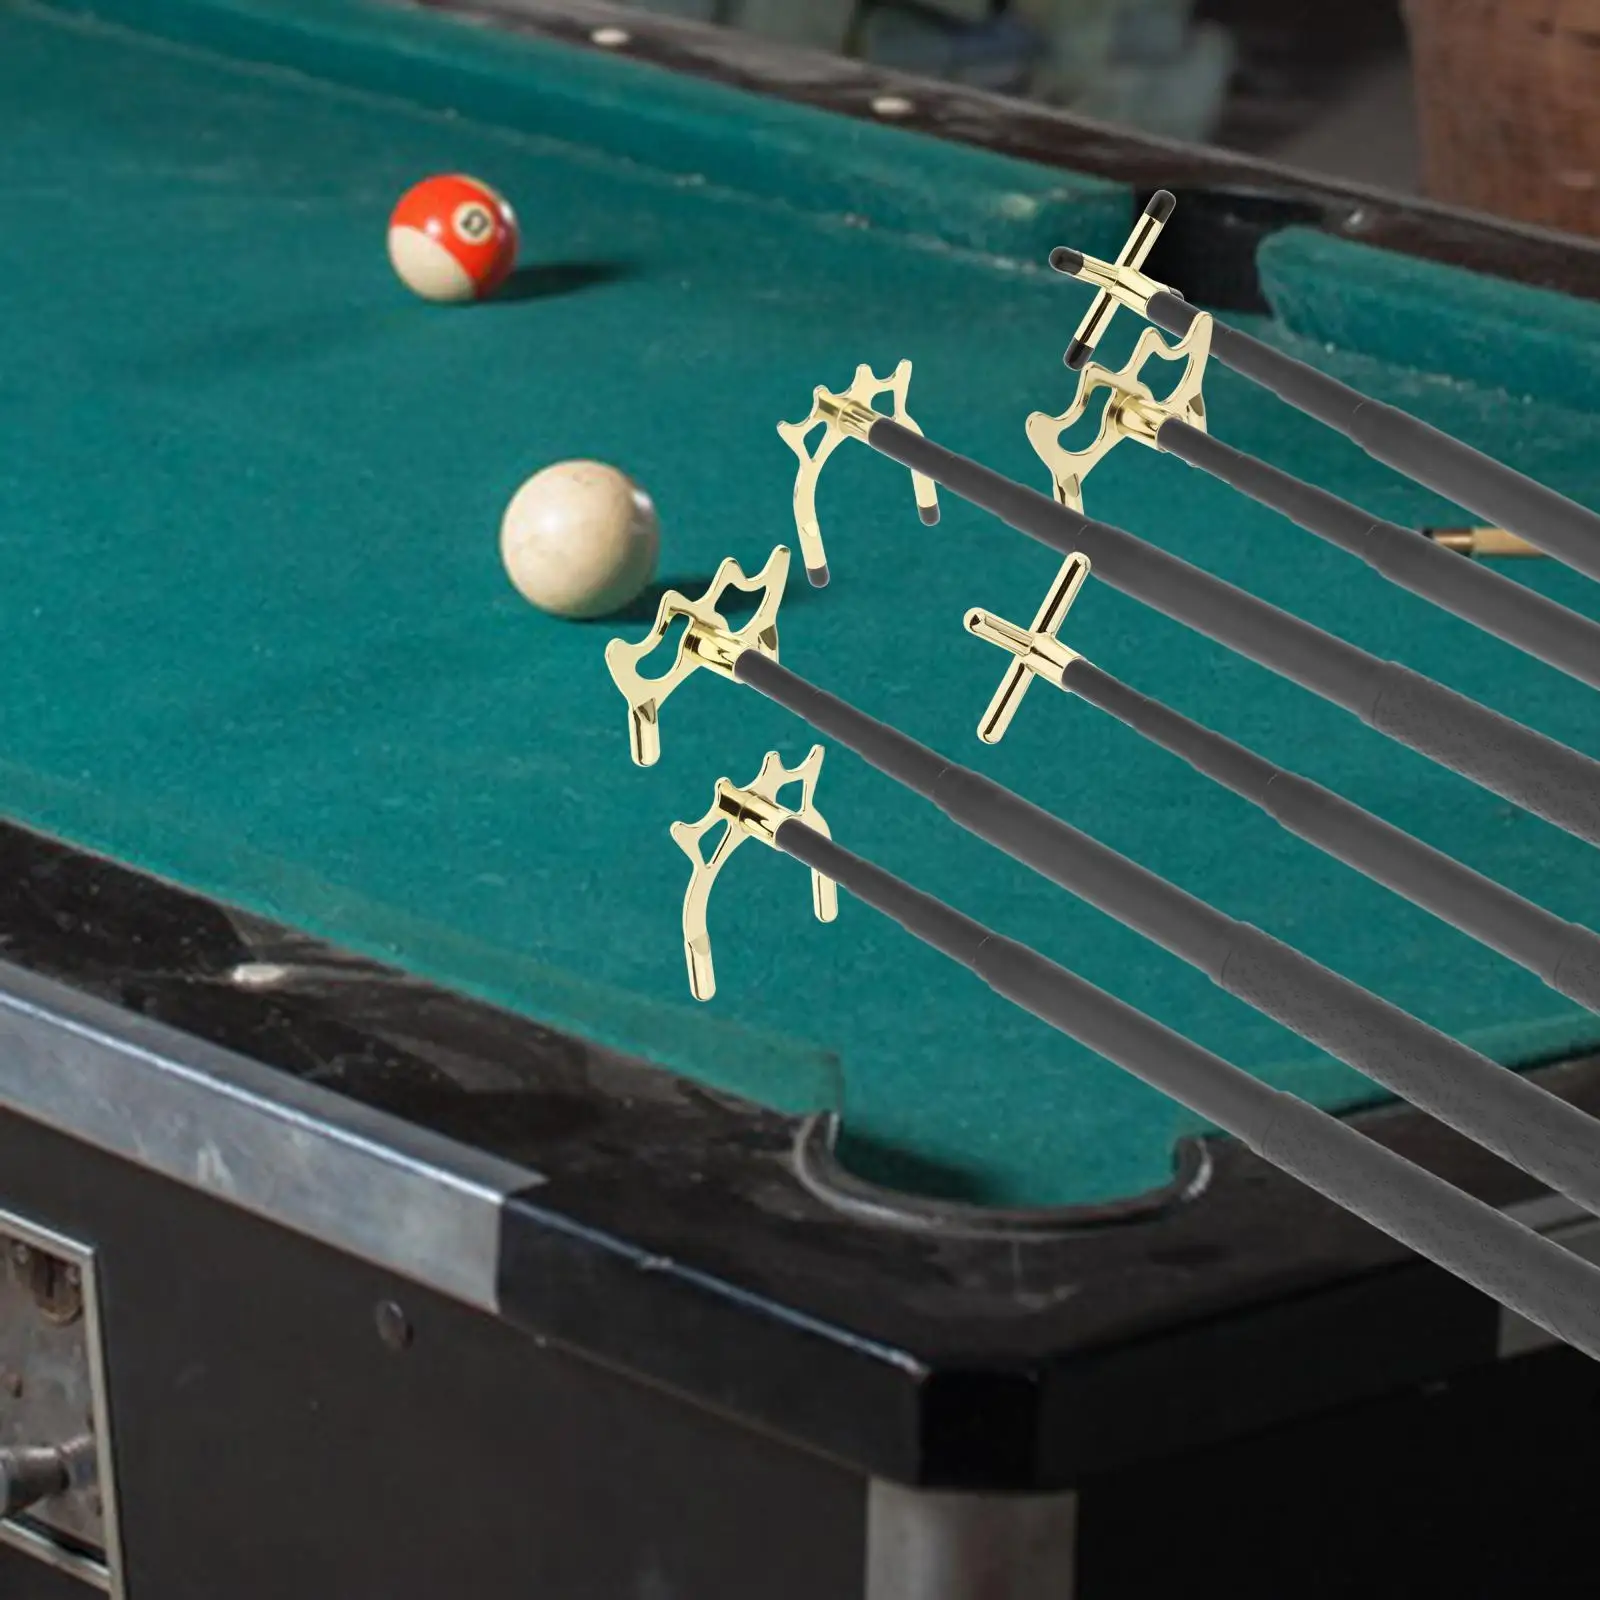 Retractable Billiards Cue Stick Bridge for Pool Table Game Competition